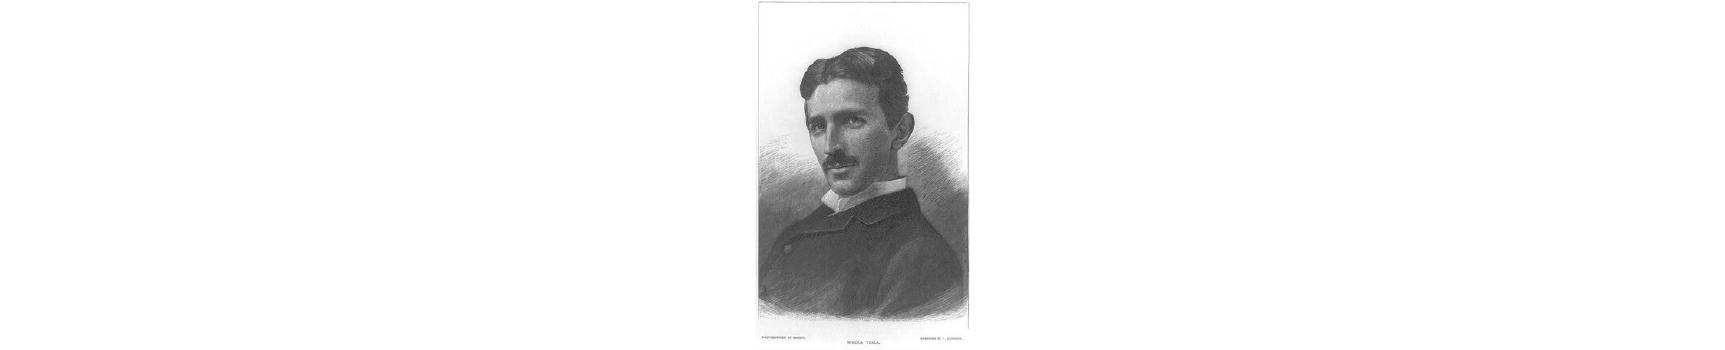 US Patents of Nikola Tesla